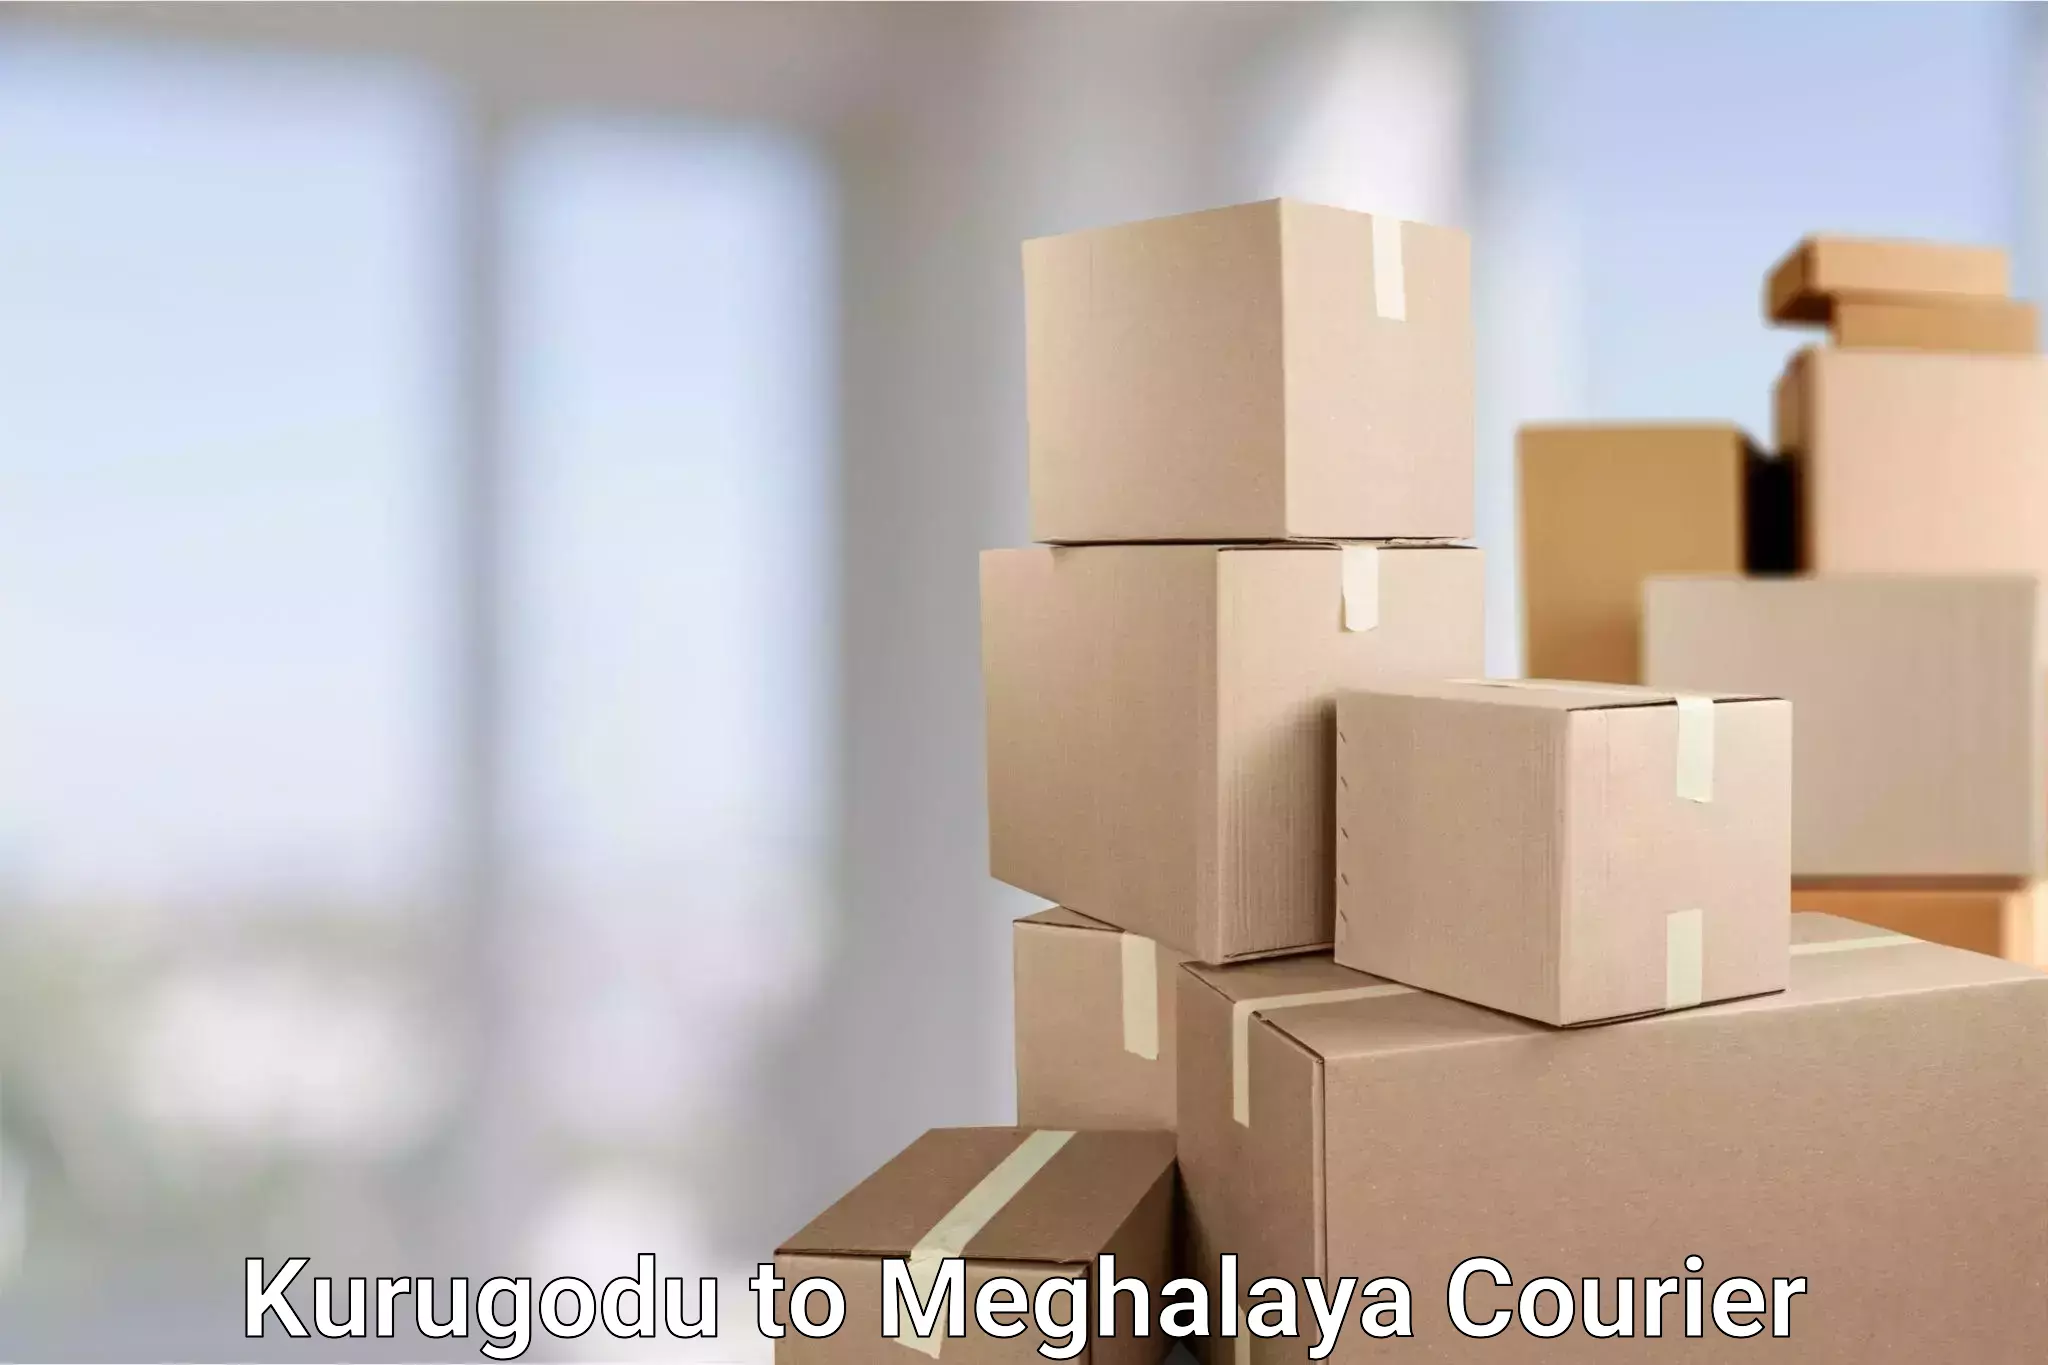 Professional parcel services Kurugodu to Meghalaya